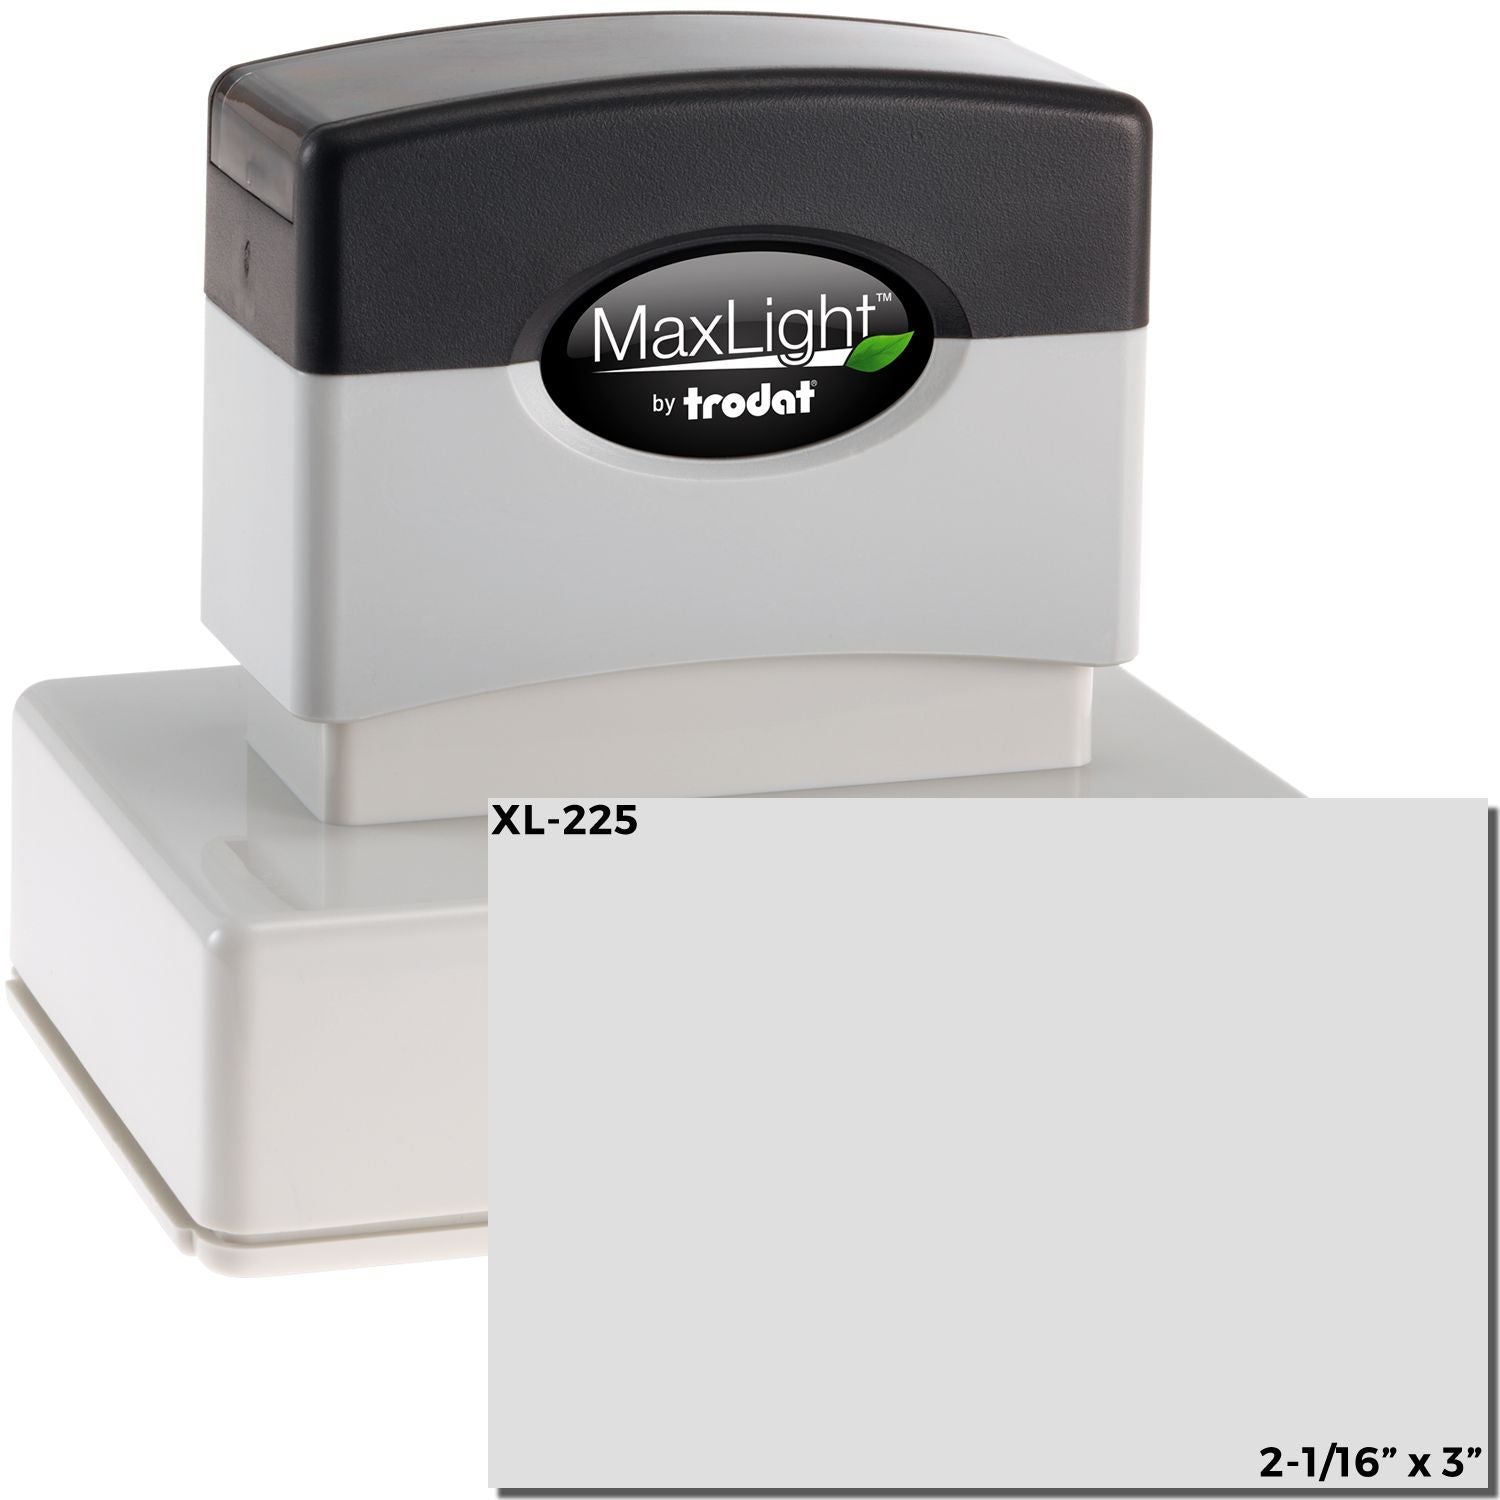 Maxlight Xl2 225 Pre Inked Stamp 2 X 3 Main Image